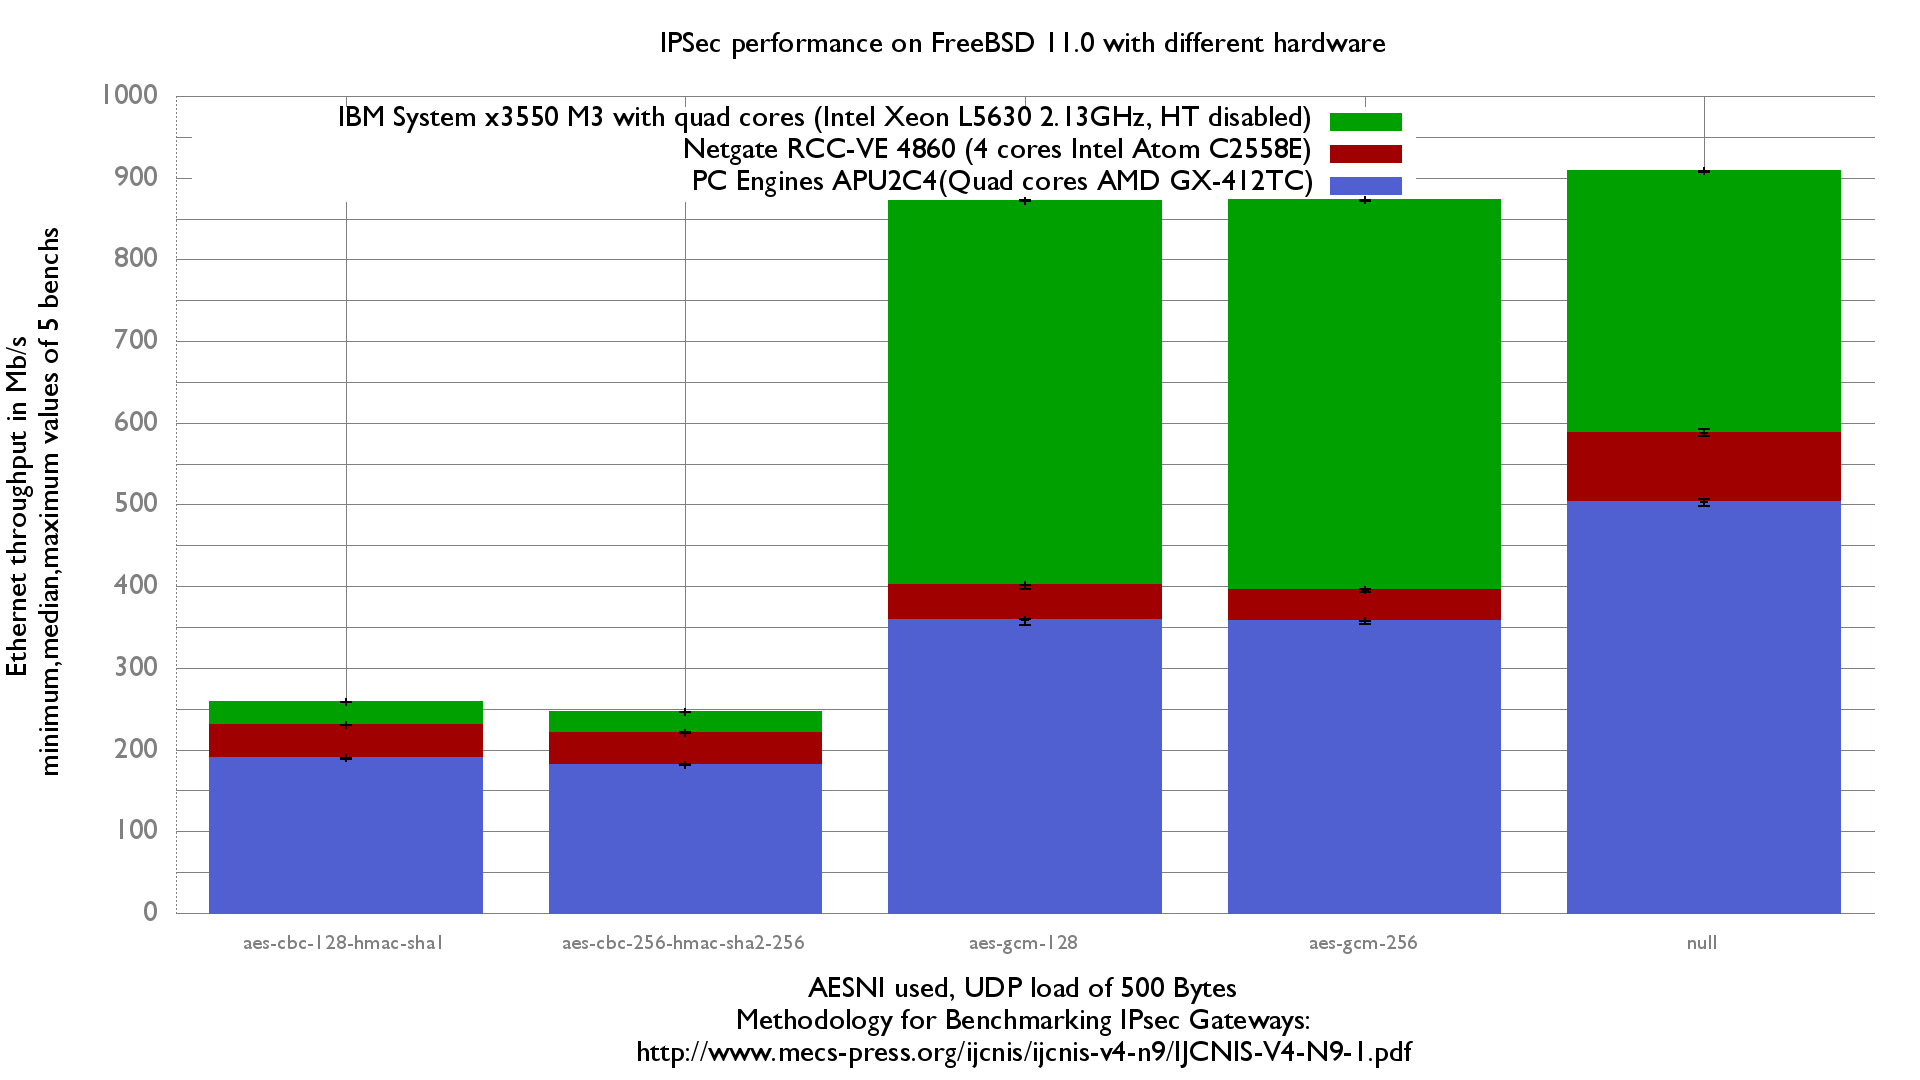 IPSec performance on multiple servers with FreeBSD 11.0